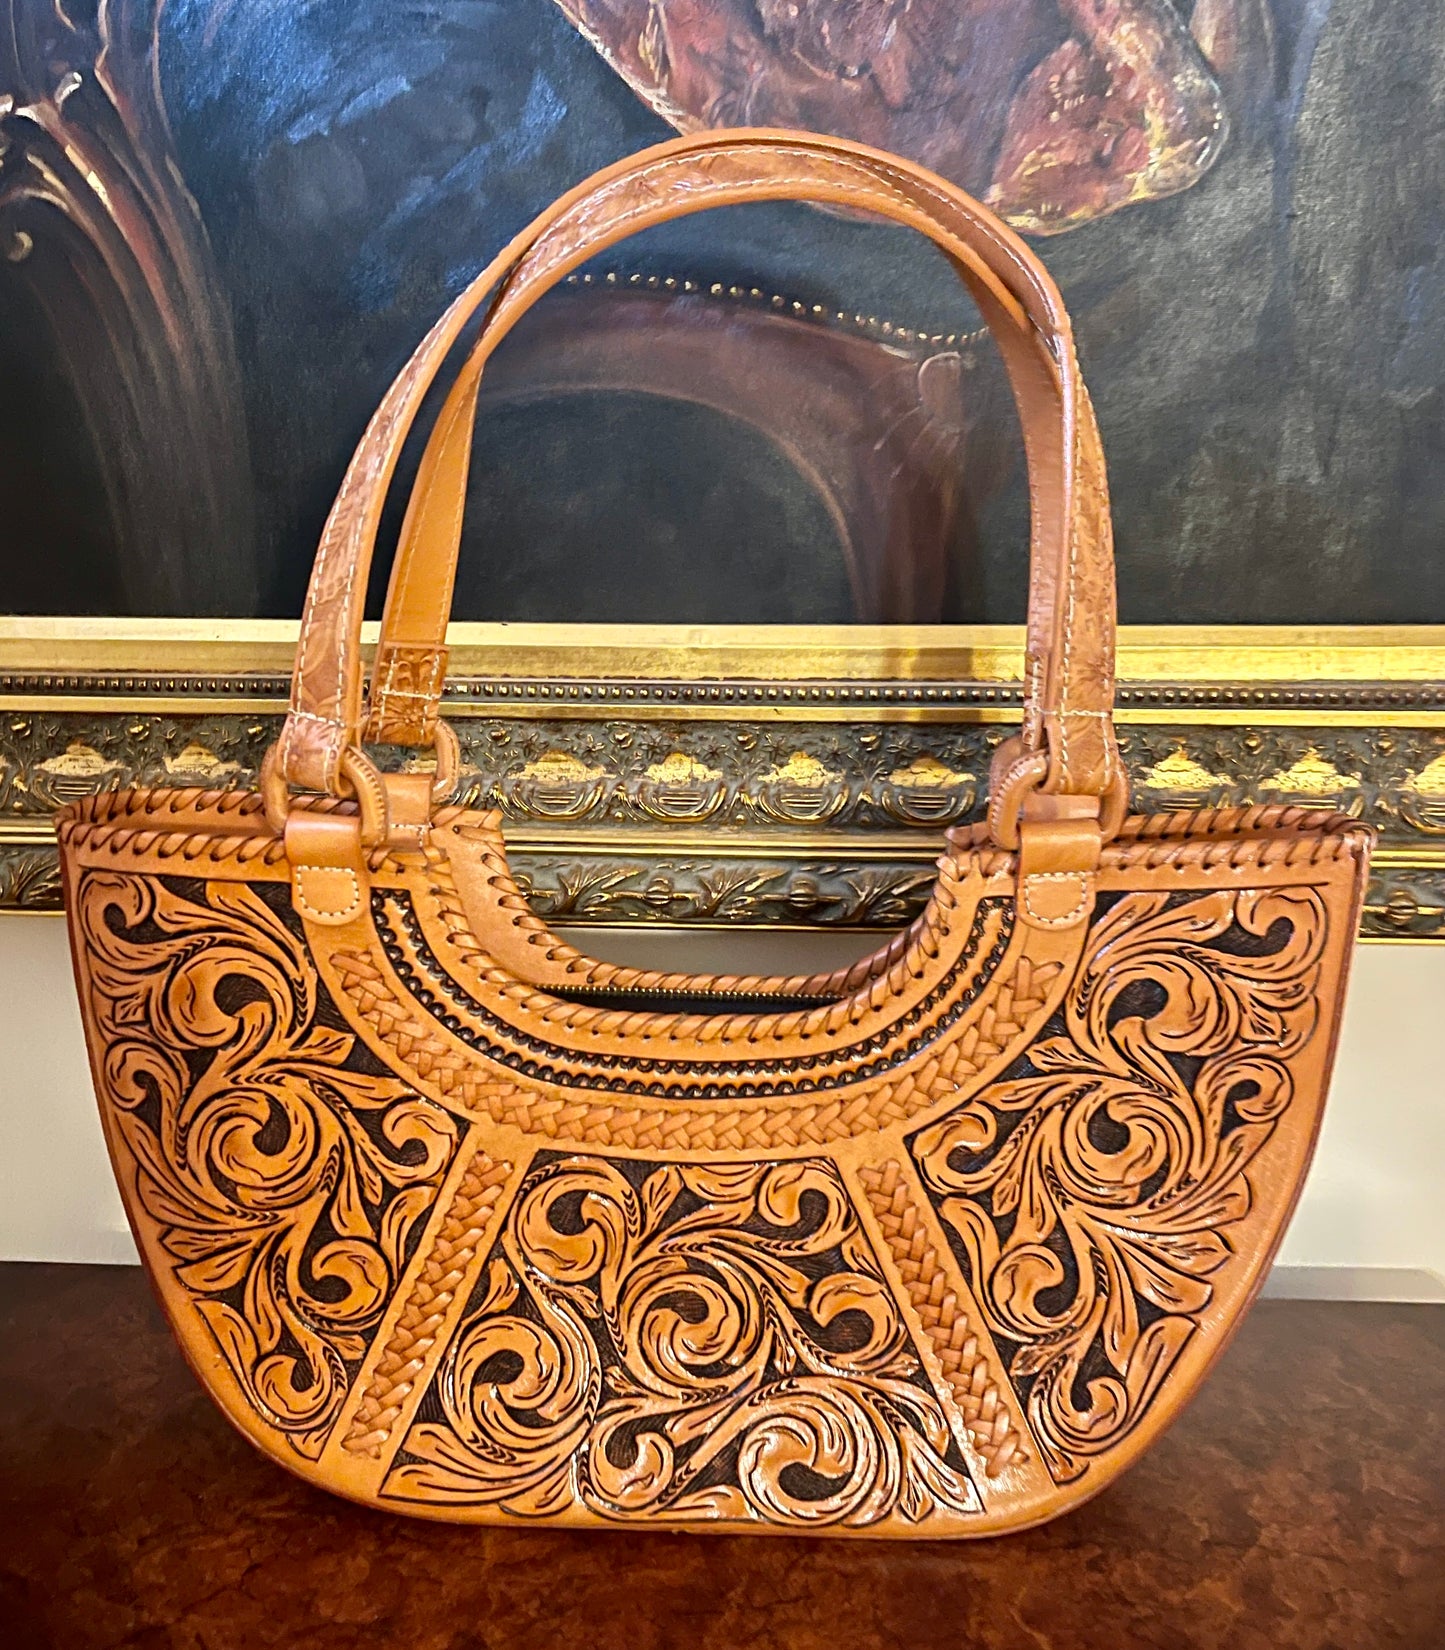 Hand-Tooled Leather Satchel, Shoulder Bag "Azteca" by ALLE - ALLE Handbags